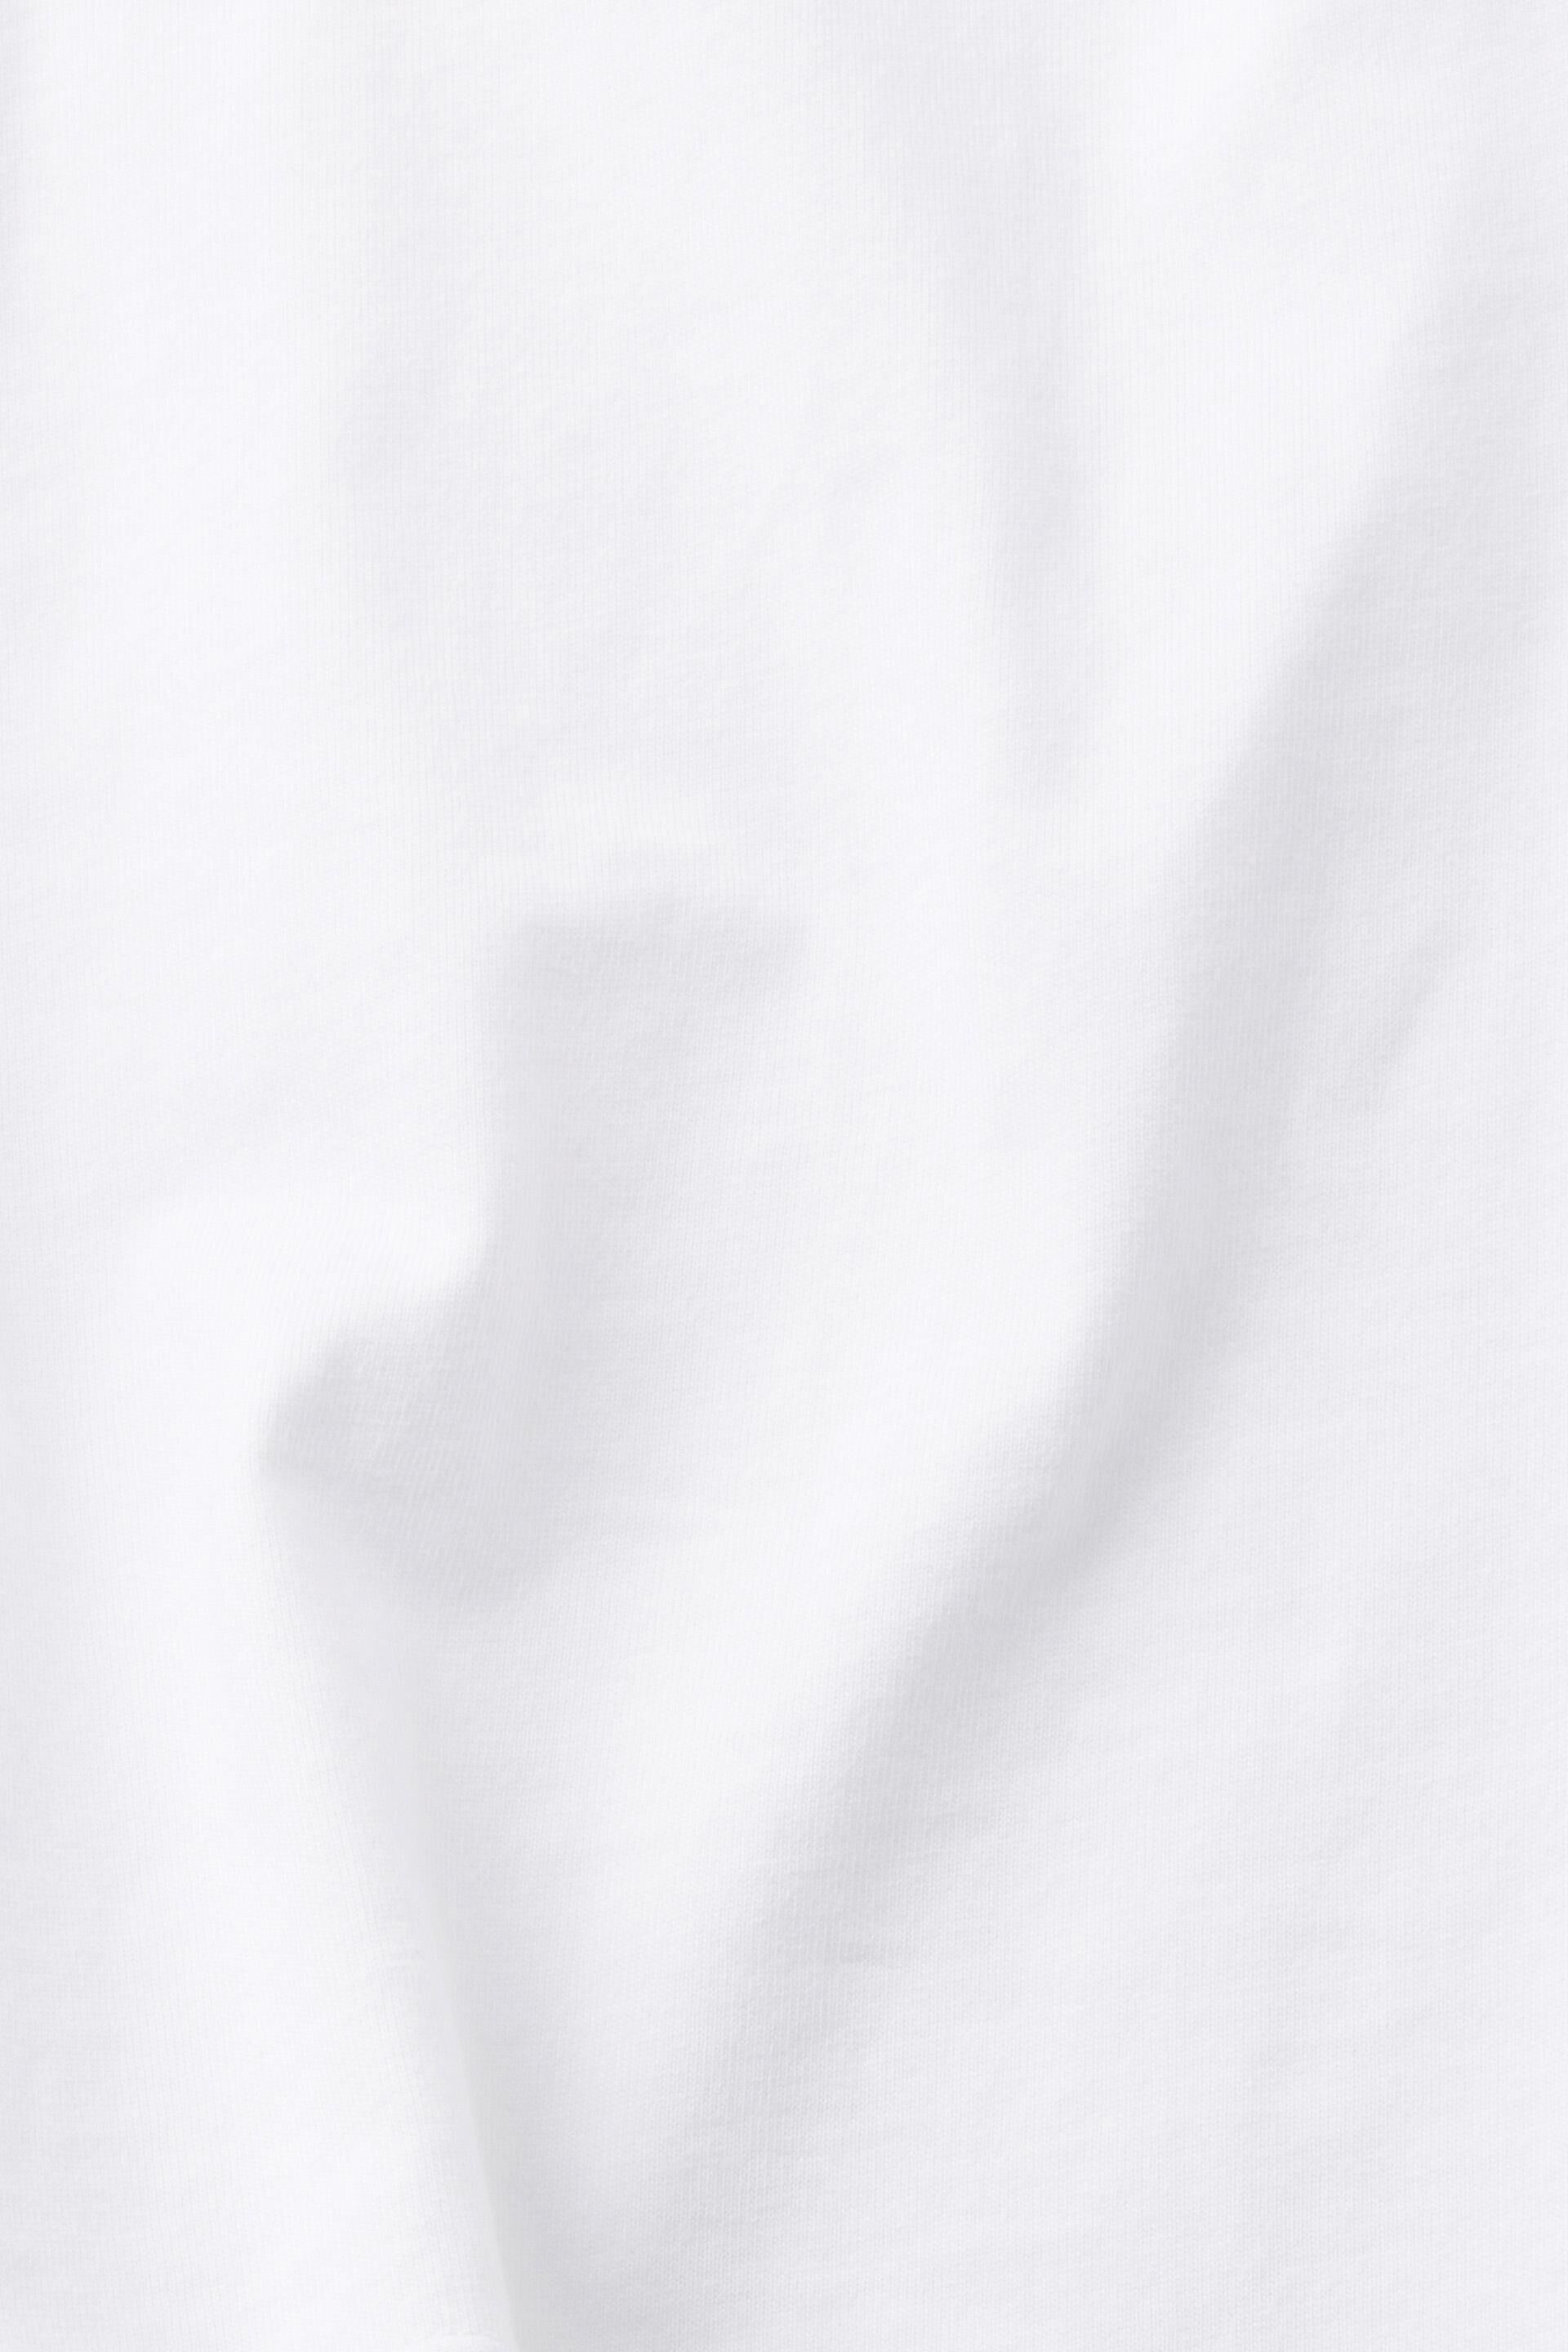 Esprit mit Baumwoll-T-Shirt gesticktem Logo